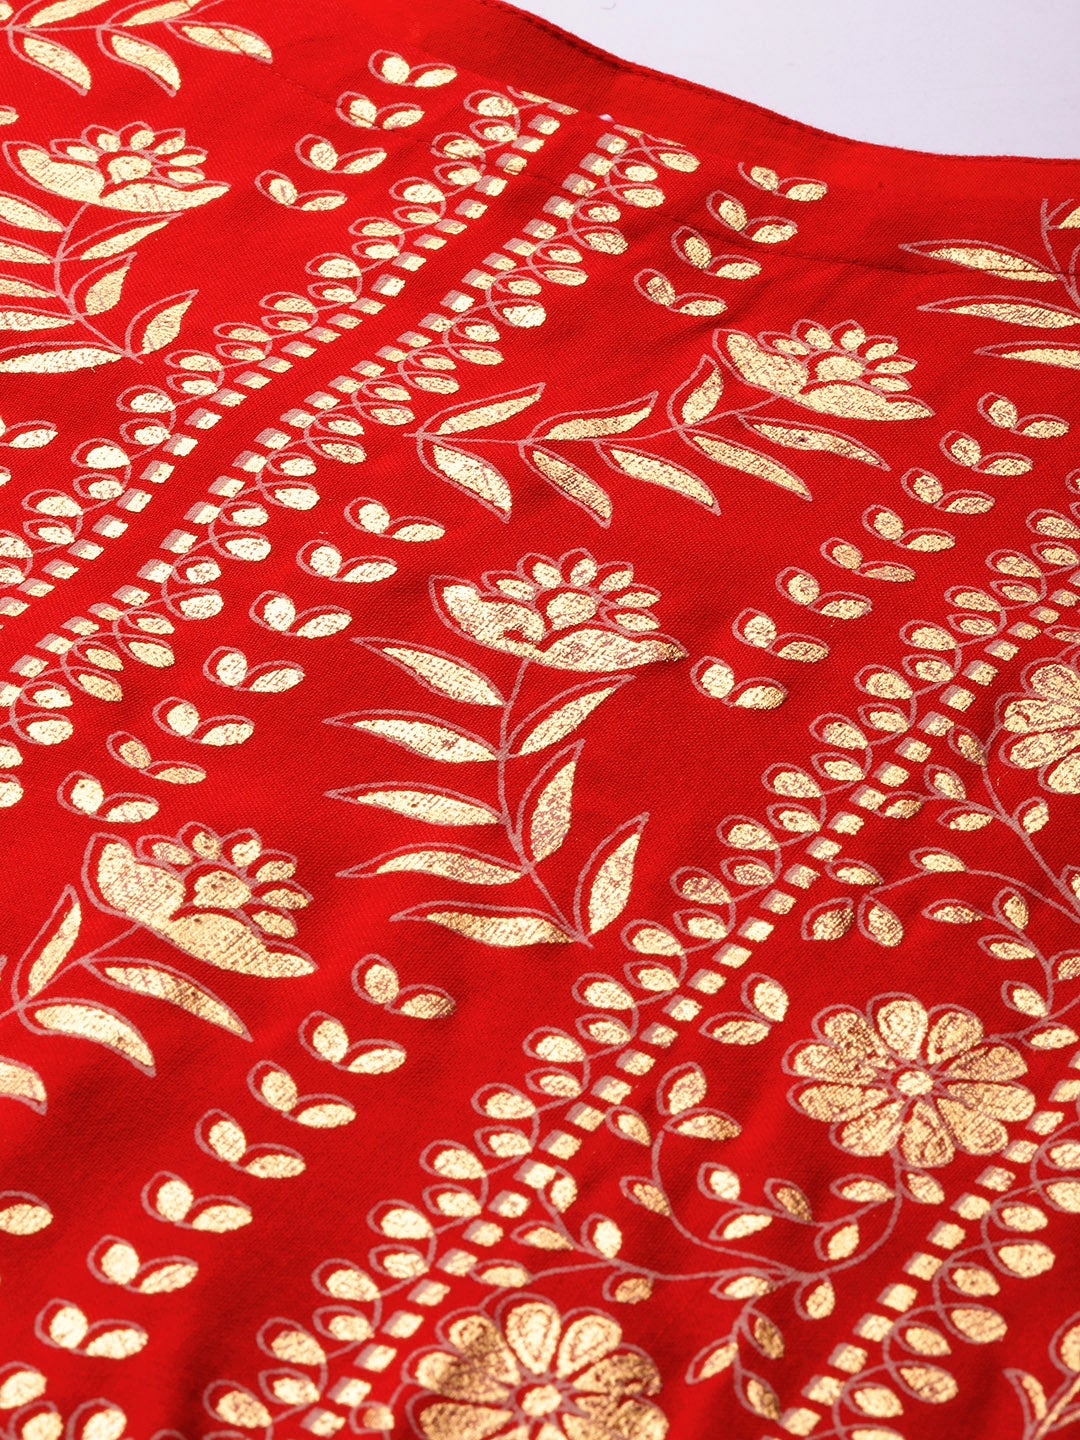 Mindhal Women's Red Colour Khadi Print Straight Rayon Kurta